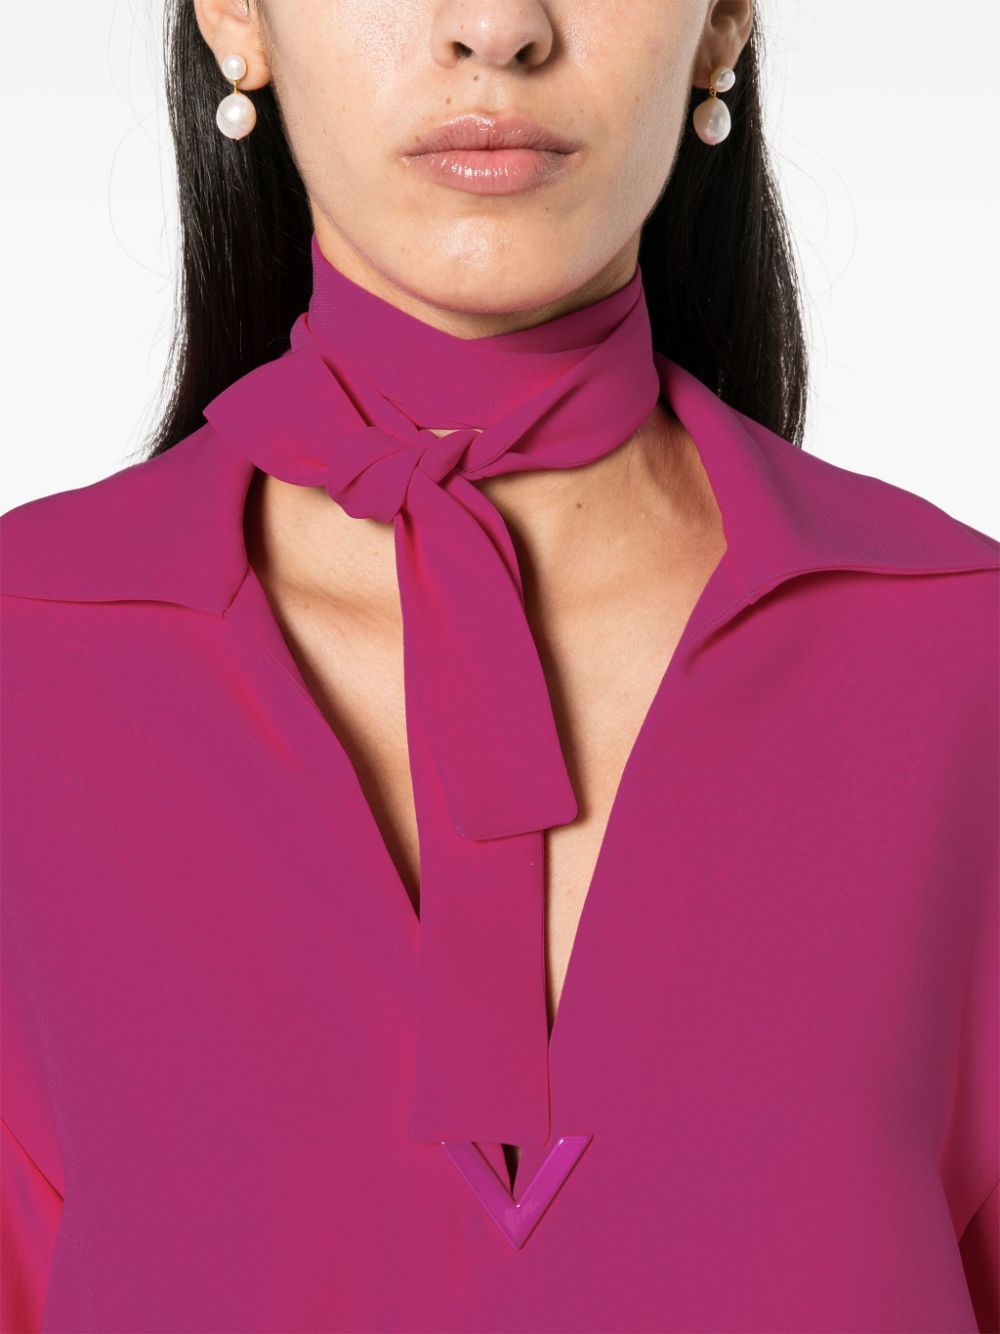 V-logo silk blouse<BR/><BR/>